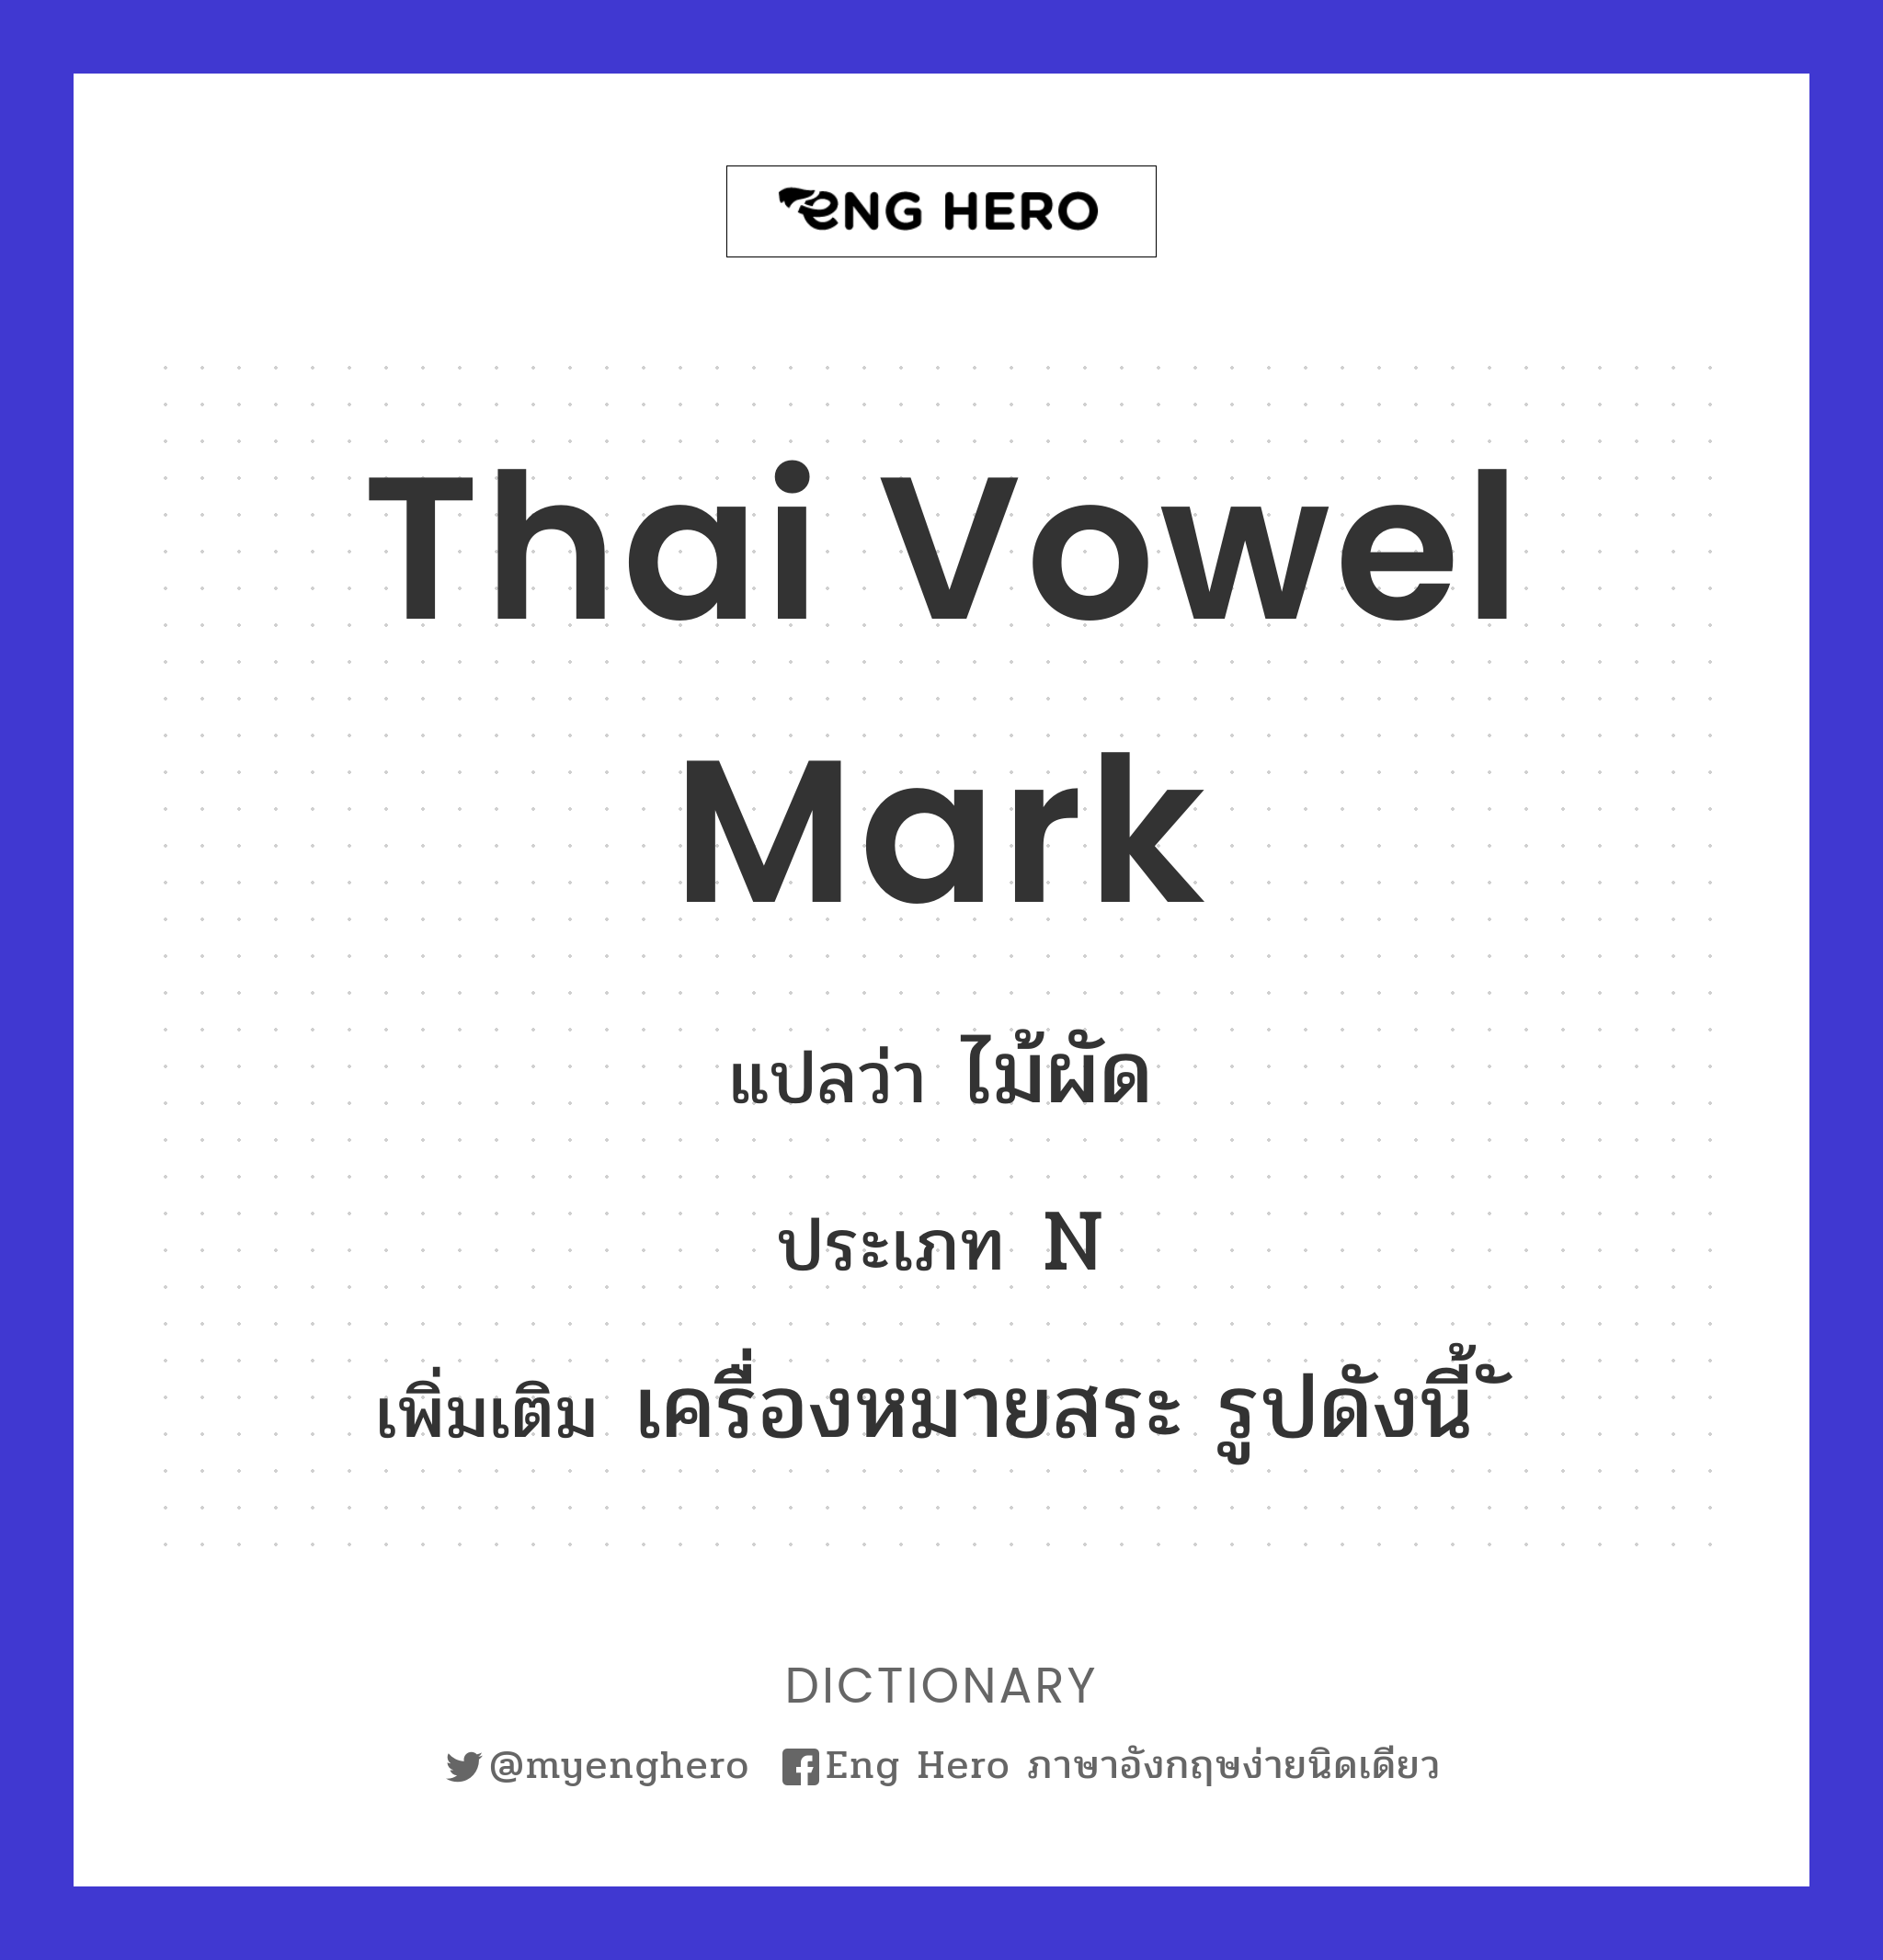 Thai vowel mark